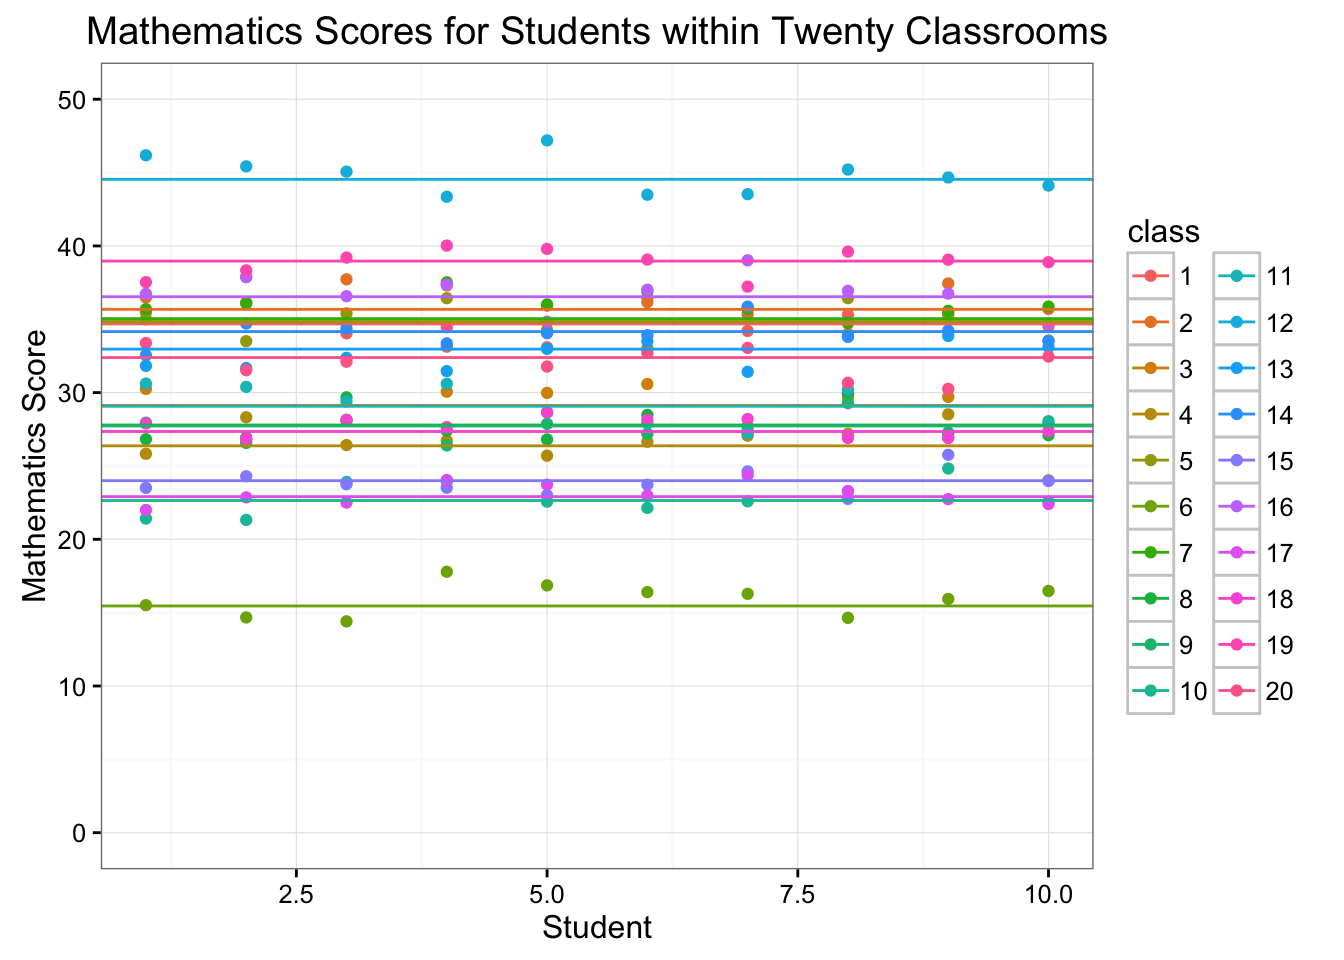 Mathematics Scores for Students within Twenty Classrooms